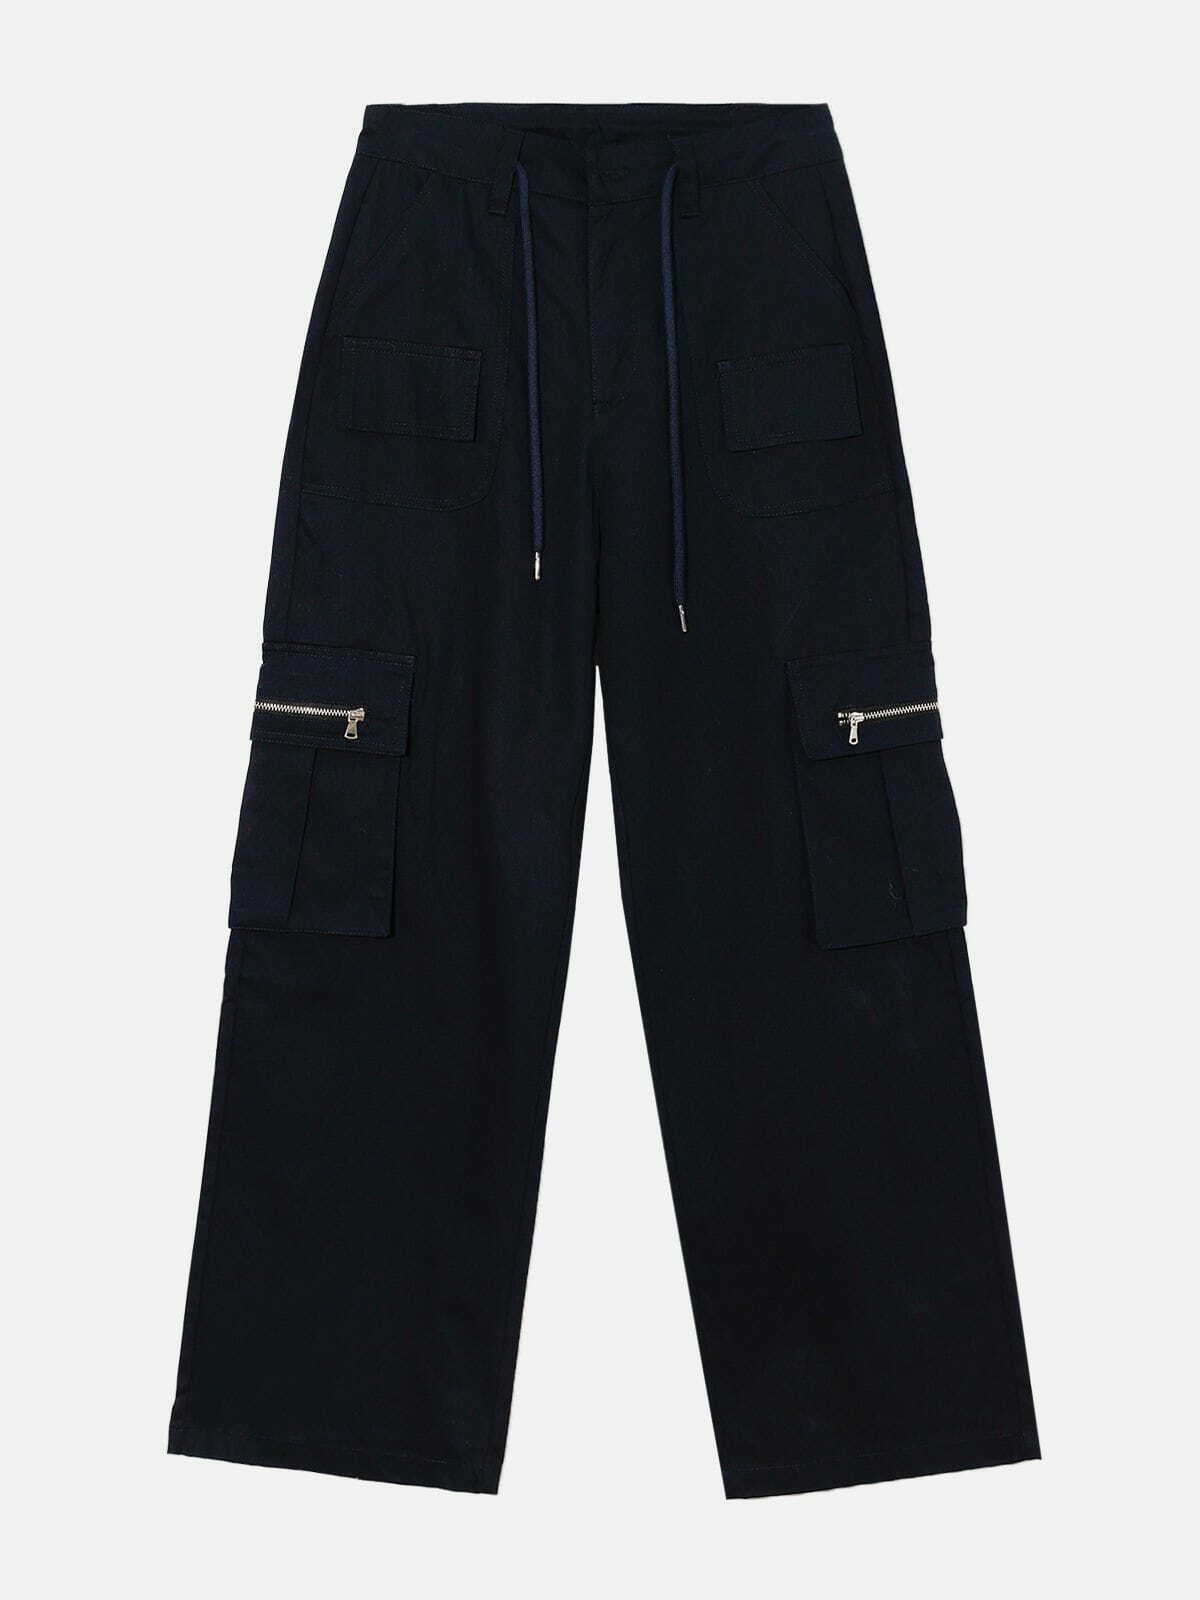 casual multi pocket pants with drawstring   urban chic 2926